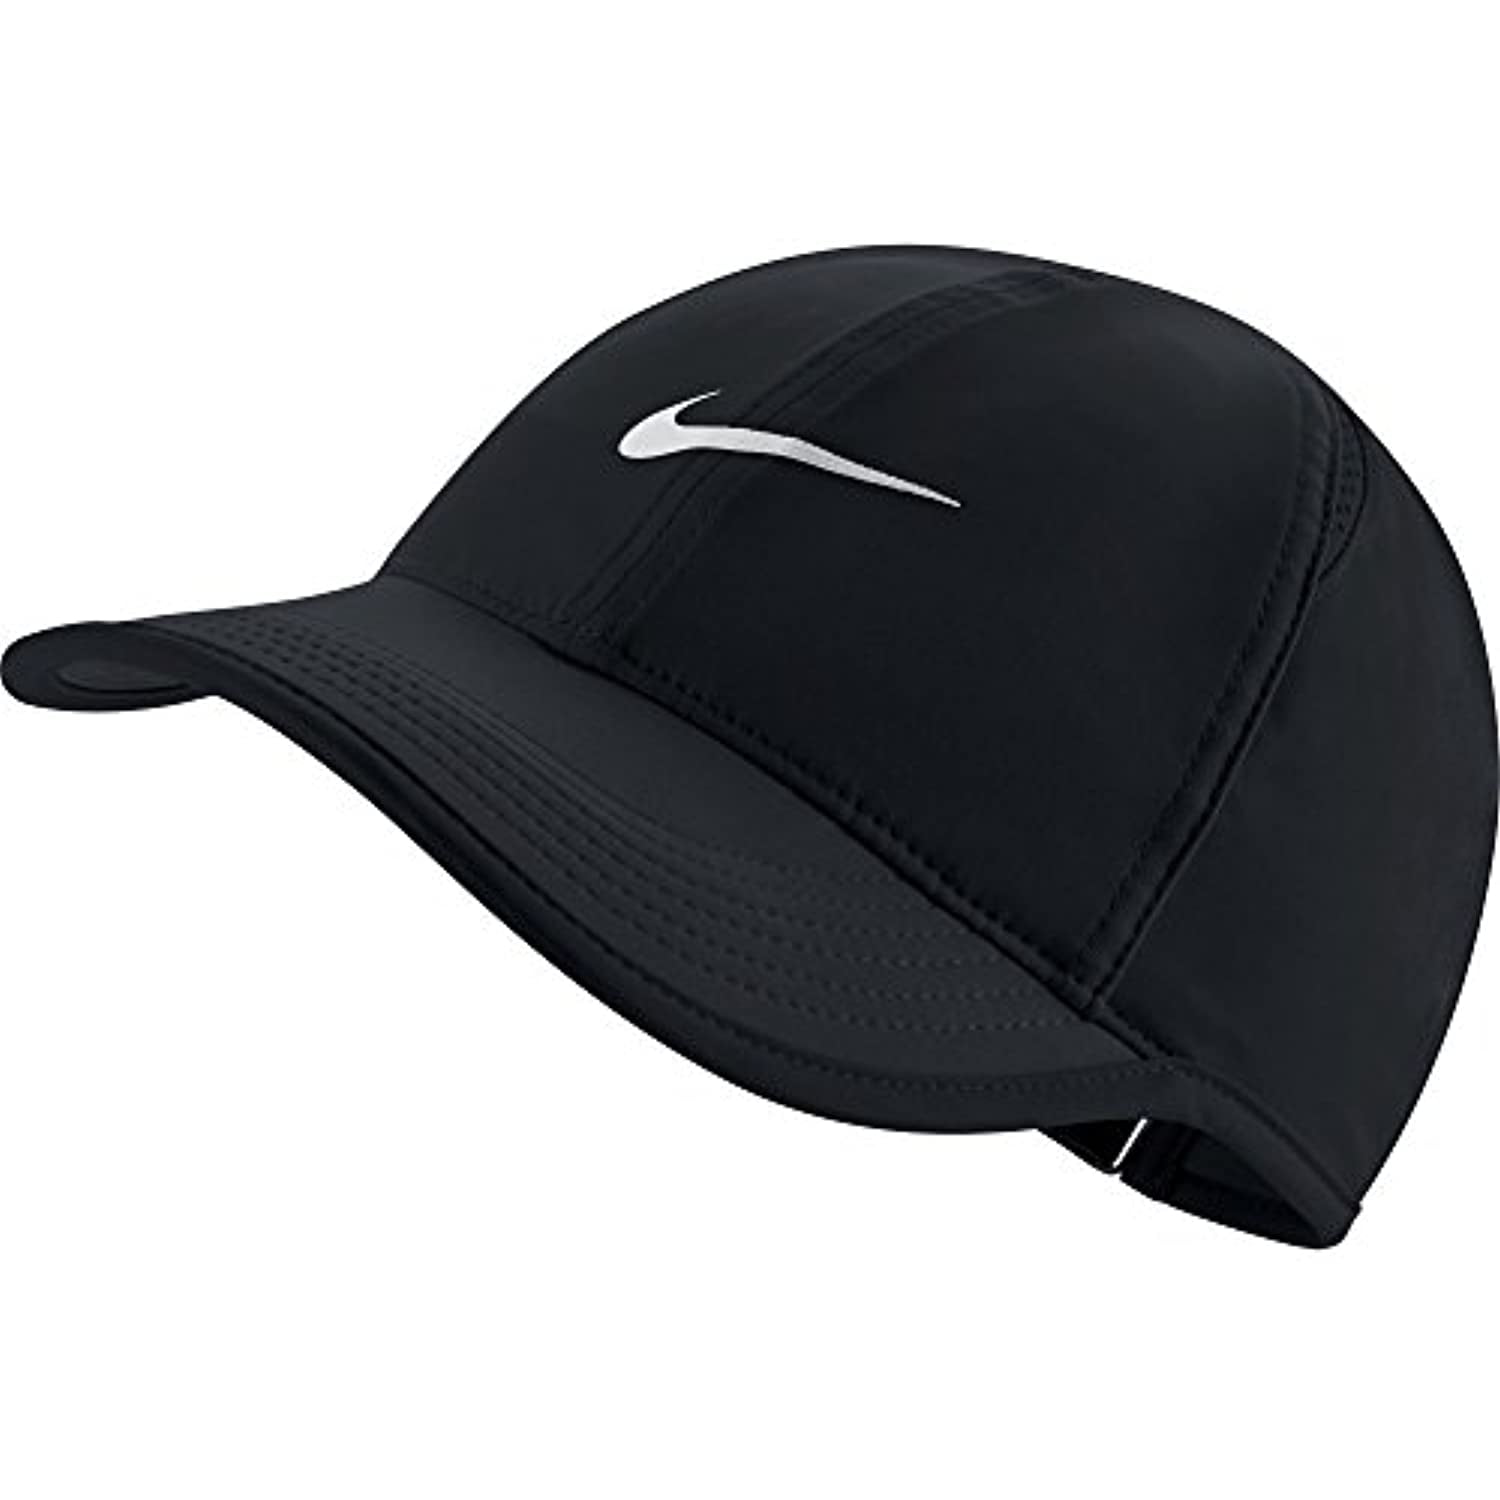 NIKE Women's AeroBill Featherlight Tennis Cap, Black/Black/White, One Size  